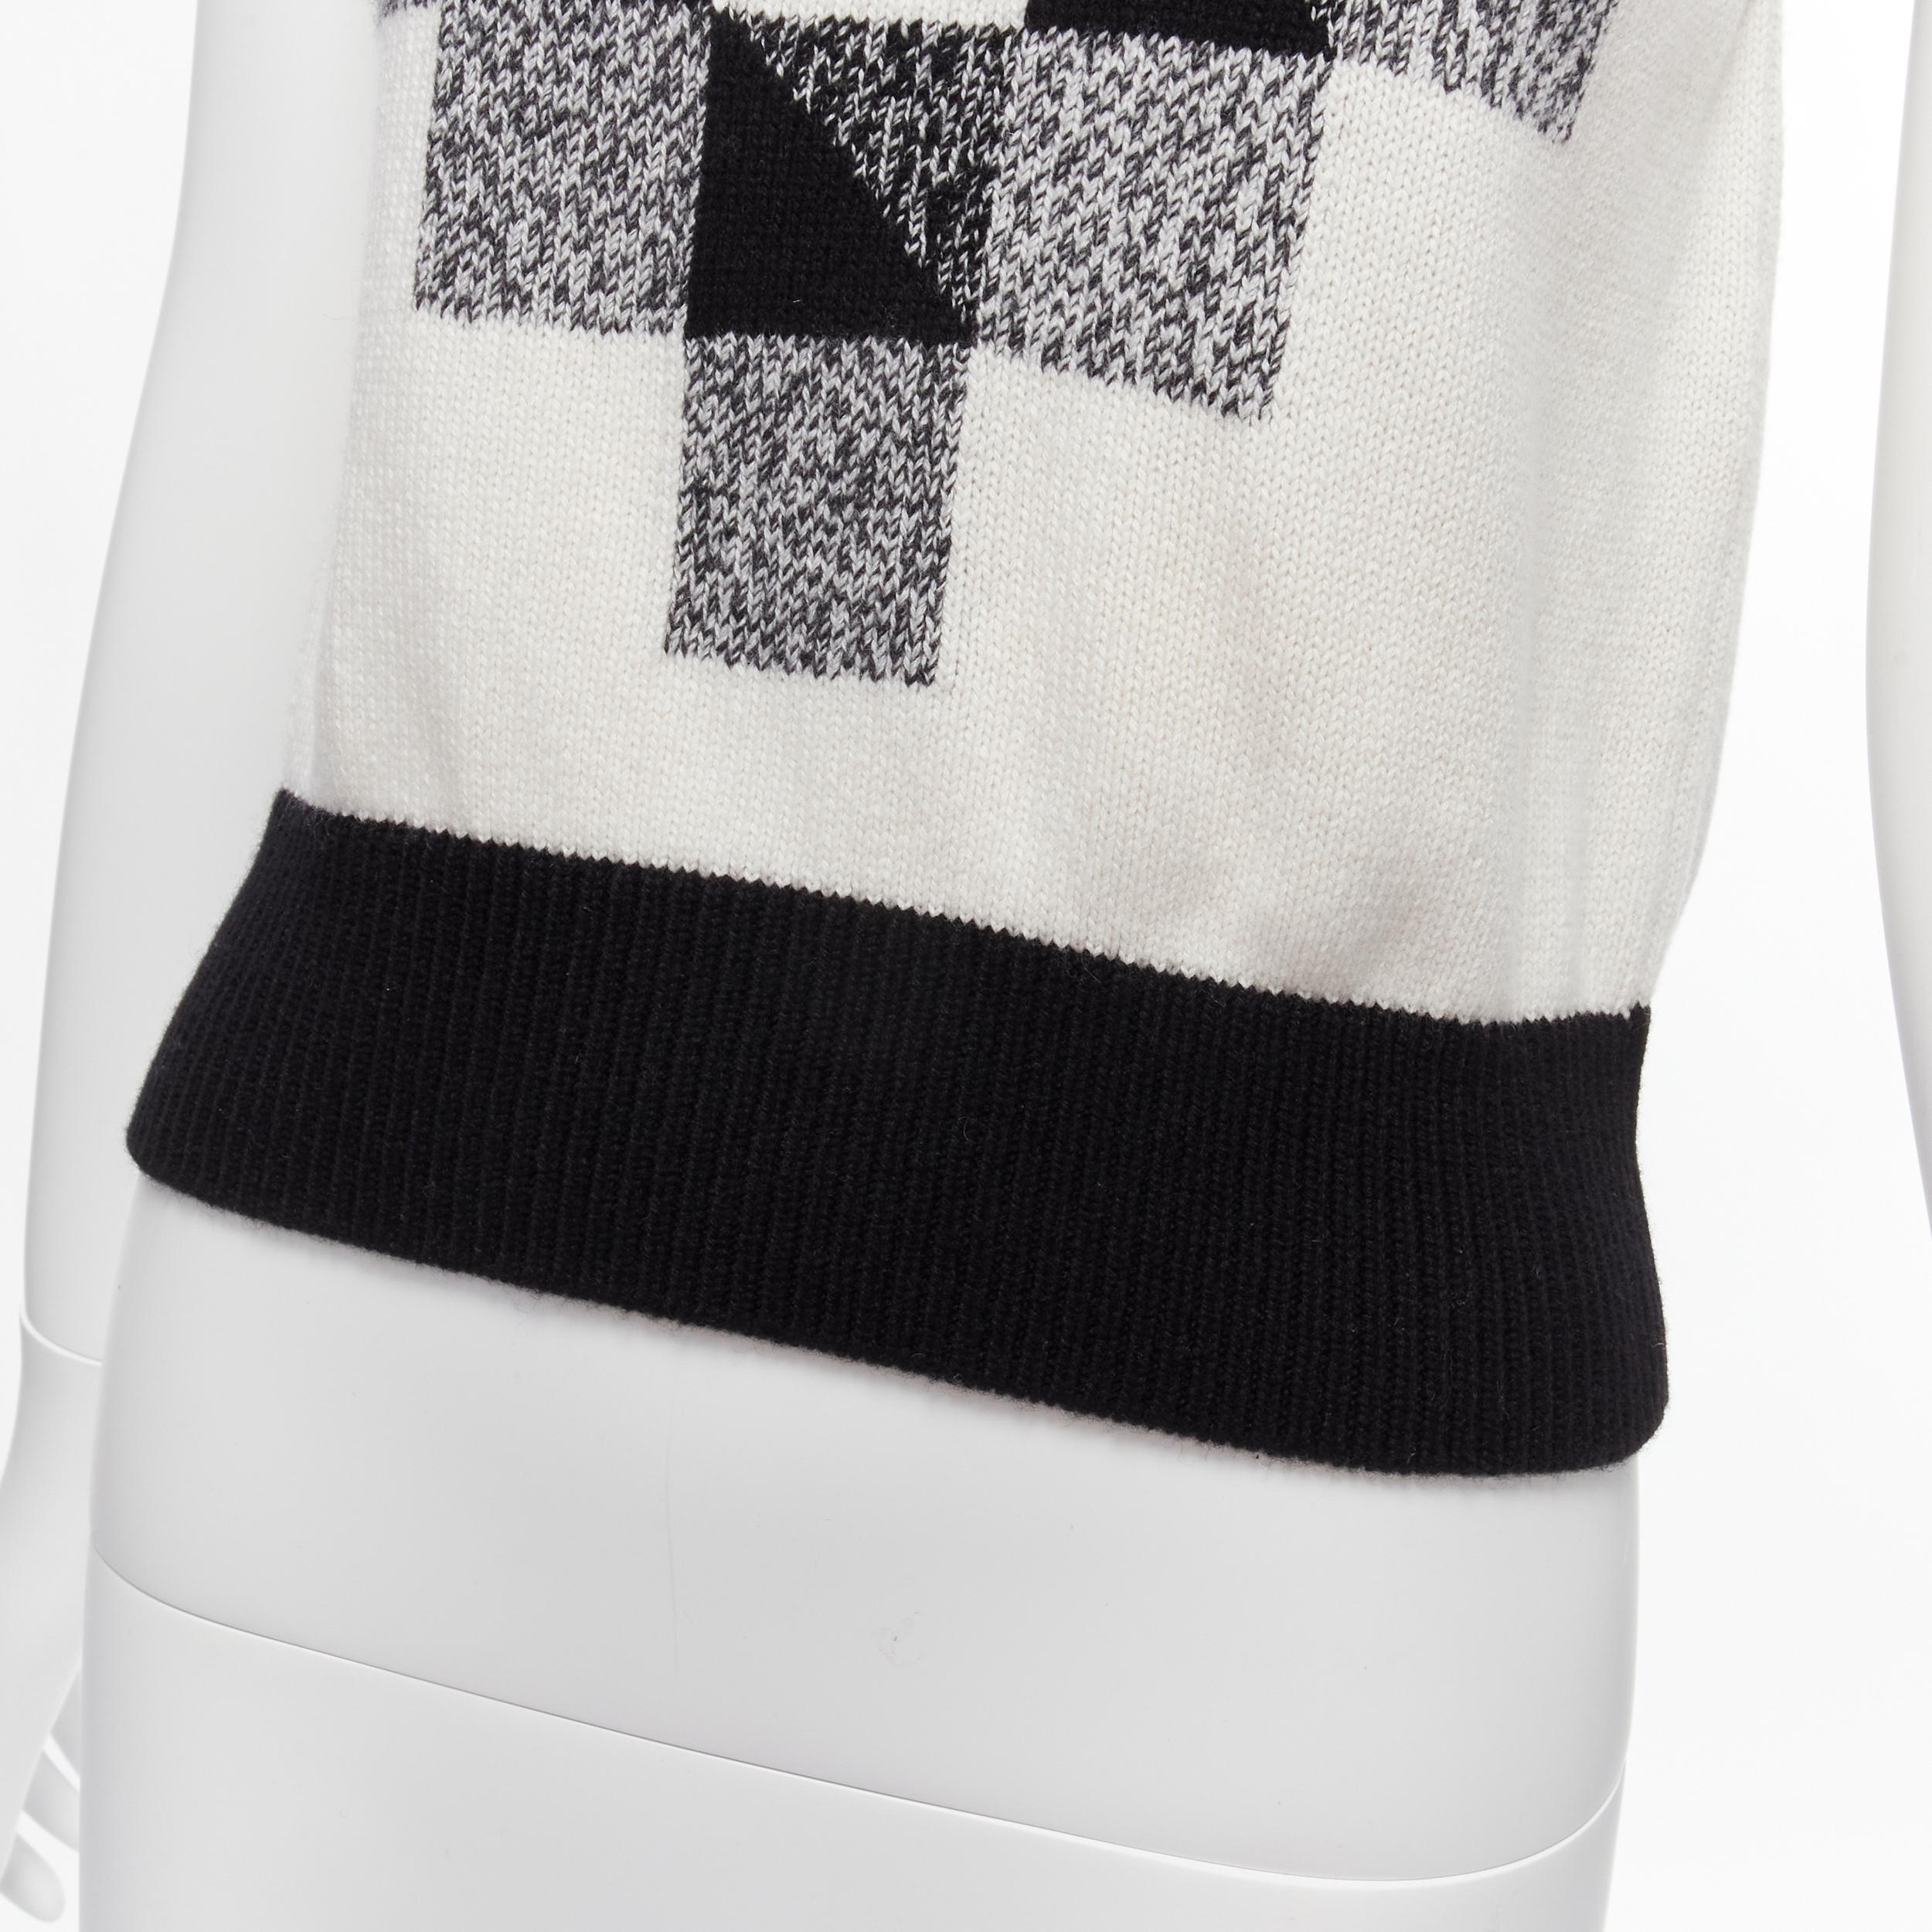 CHANEL 100% cashmere black white graphic check CC logo sweater vest FR36 S For Sale 3